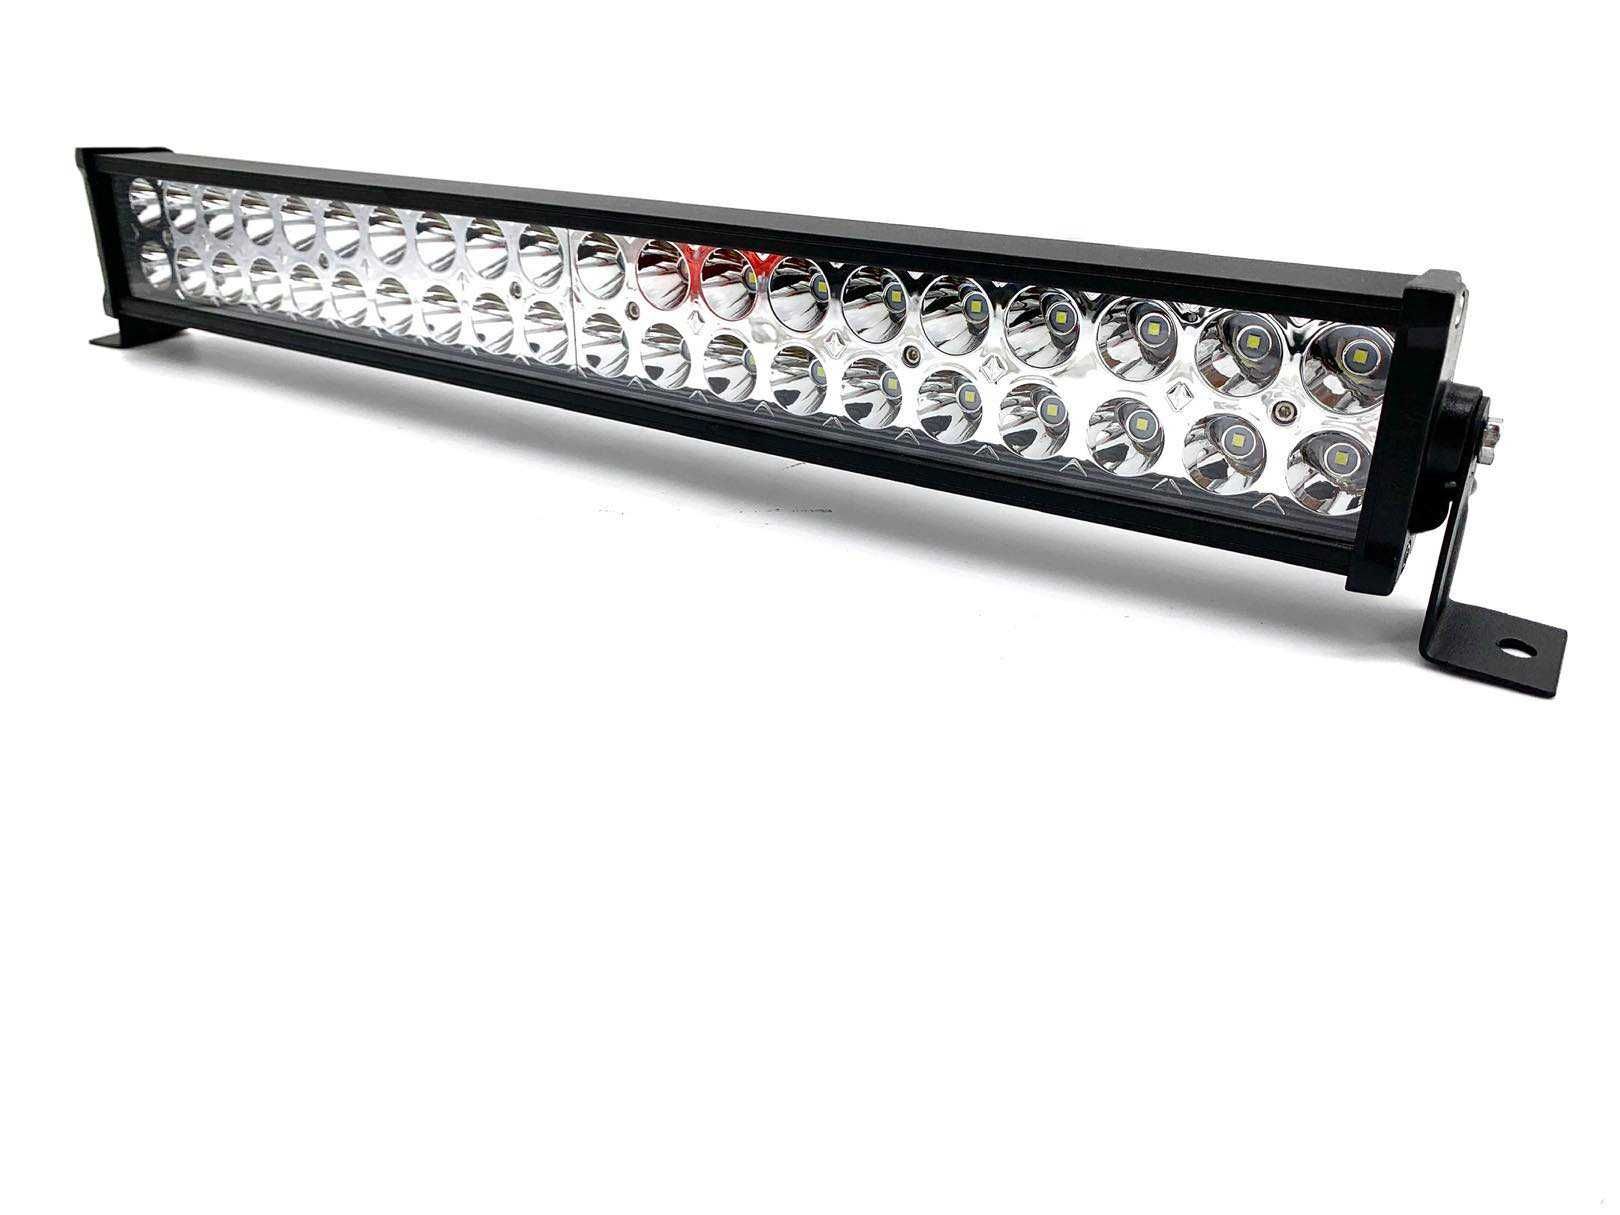 Lampa robocza szperacz LED 54 cm halogen 120W